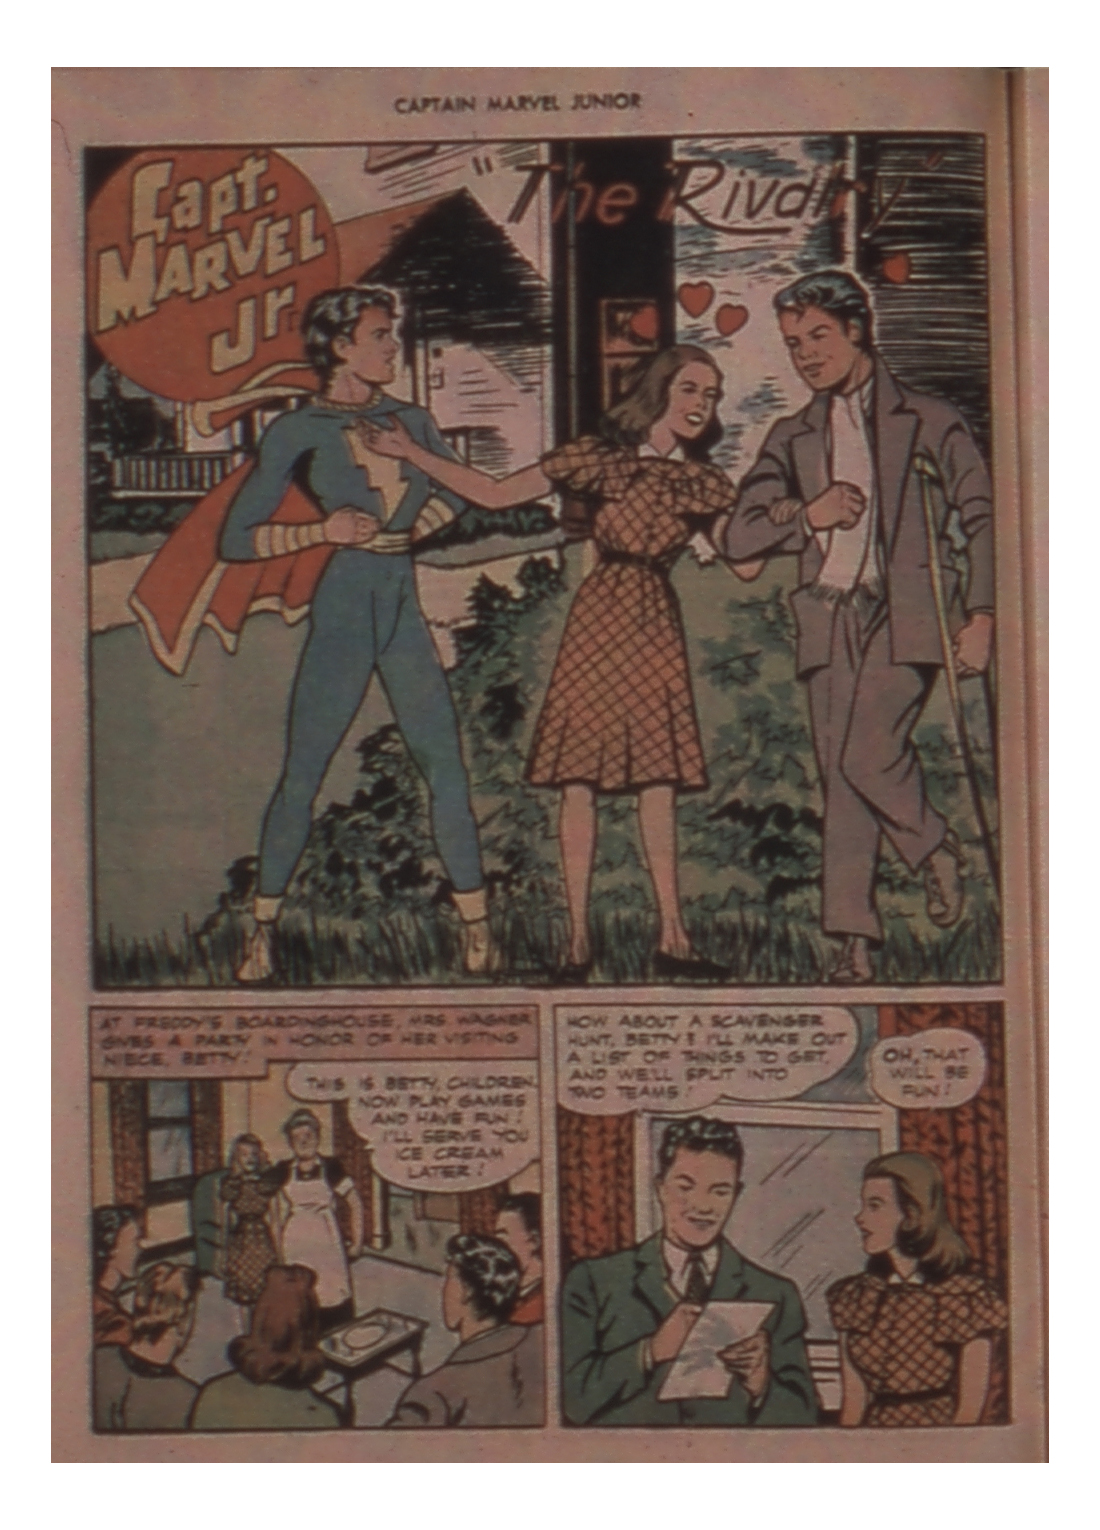 Read online Captain Marvel, Jr. comic -  Issue #55 - 16